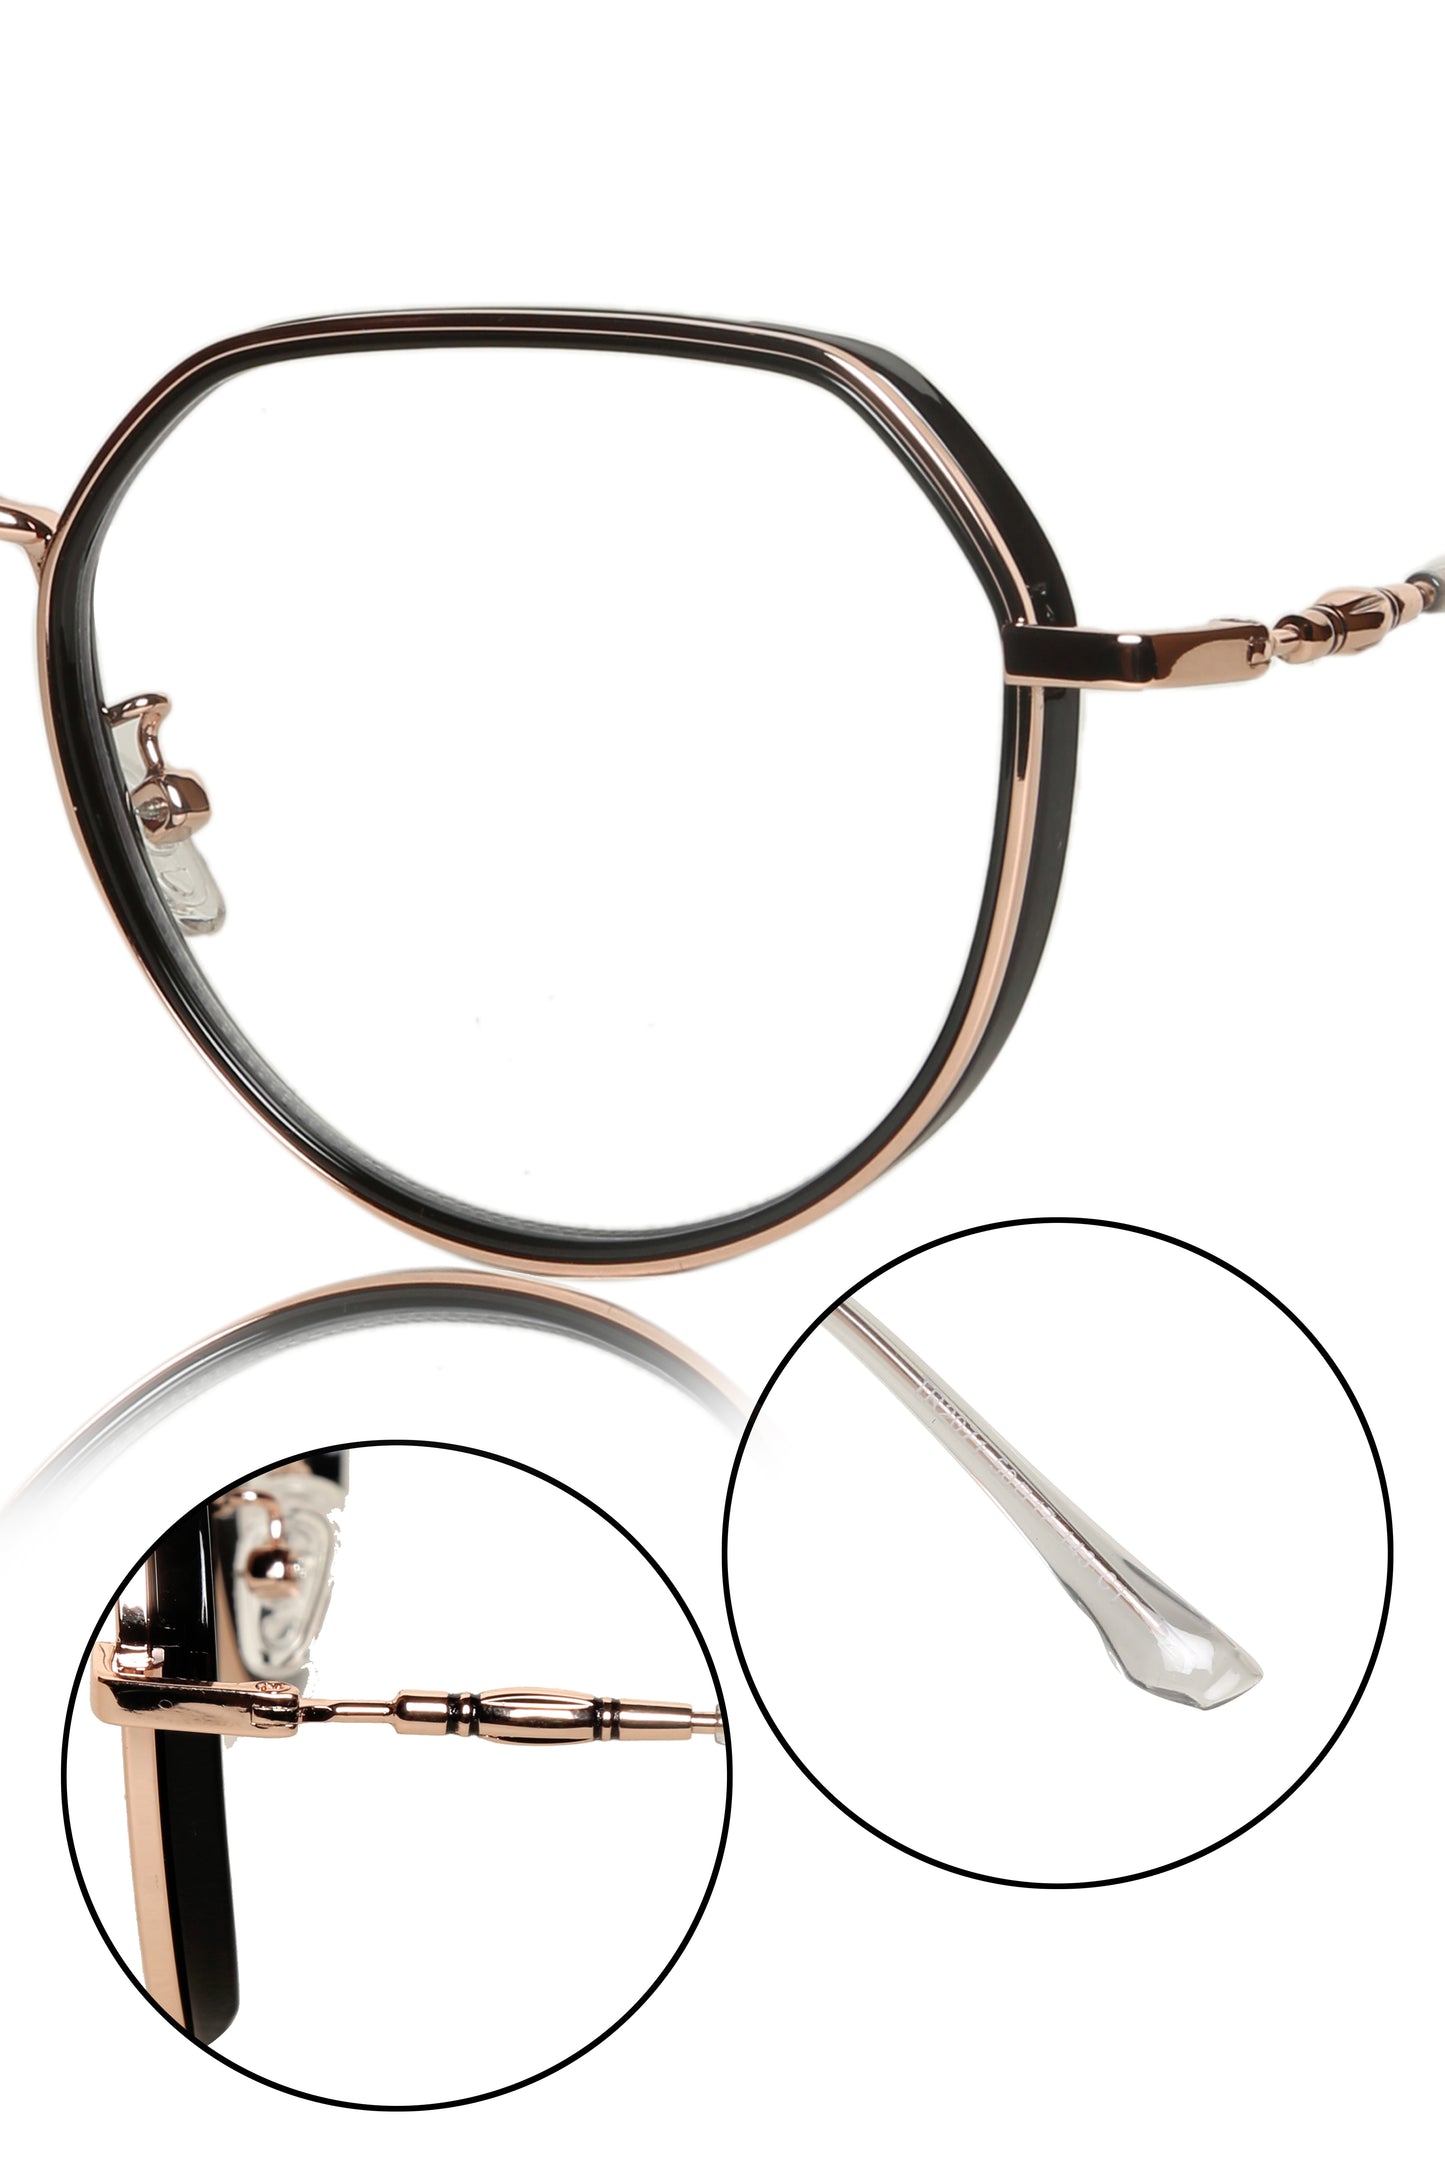 Jodykoes® Premium Series Round-Flat Top Eyewear Eyeglasses Spectacles Frame for Men and Women (Black Gold)